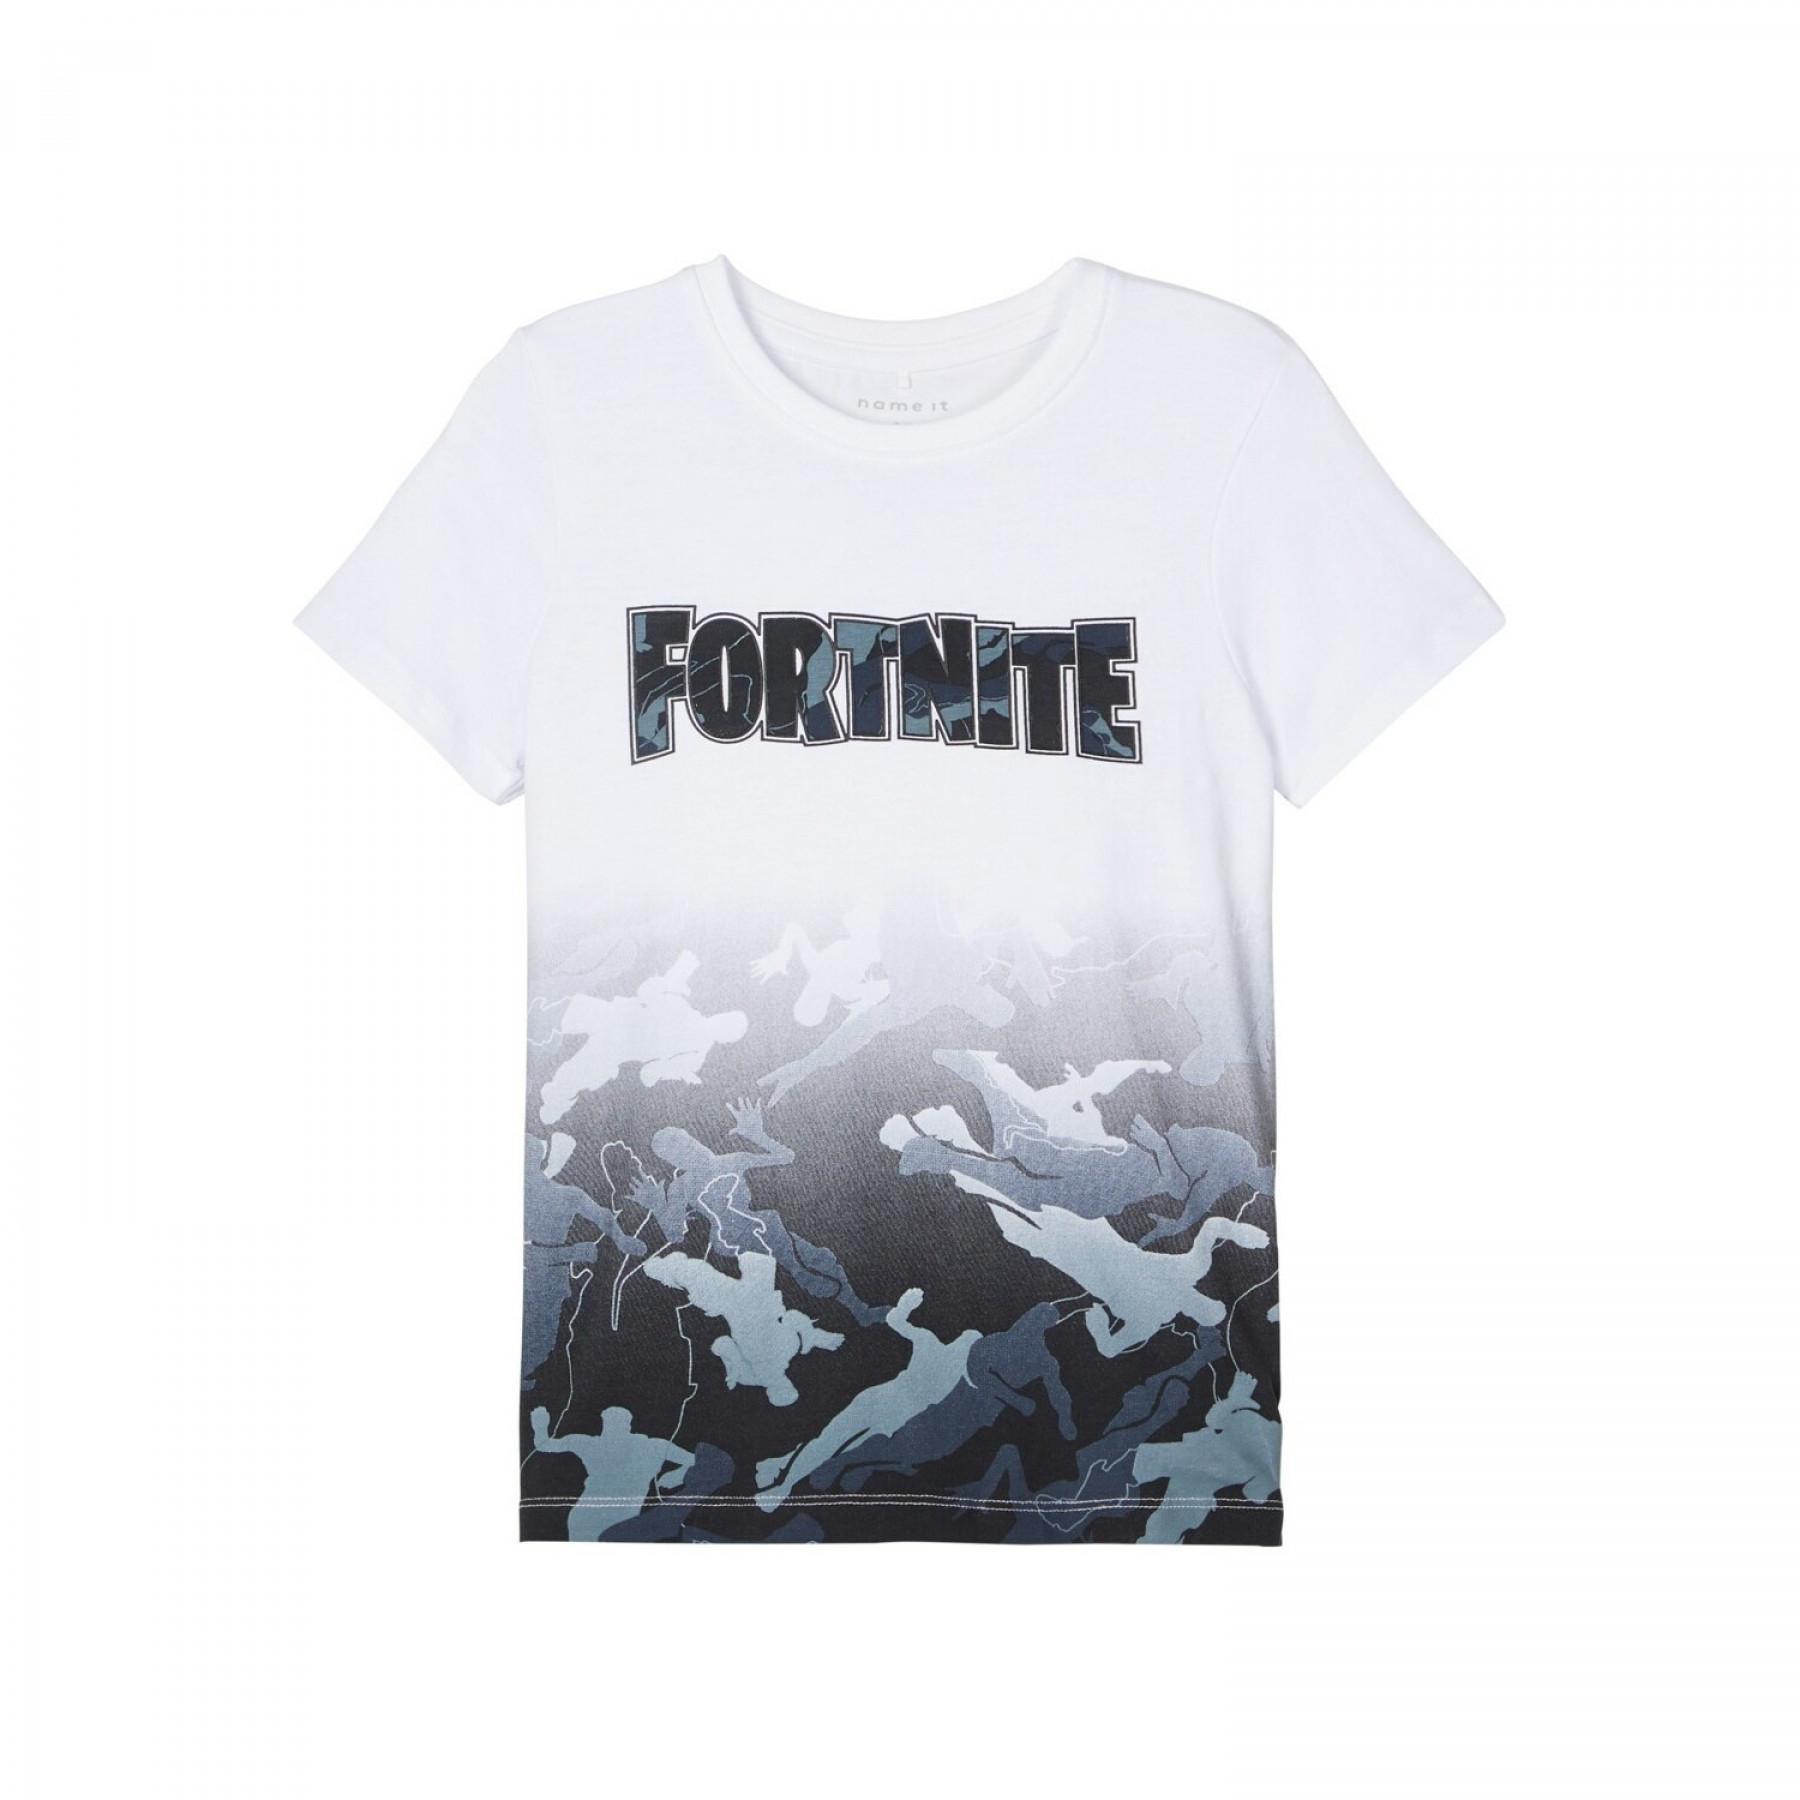 T-shirt ragazzo Name it Fortnite